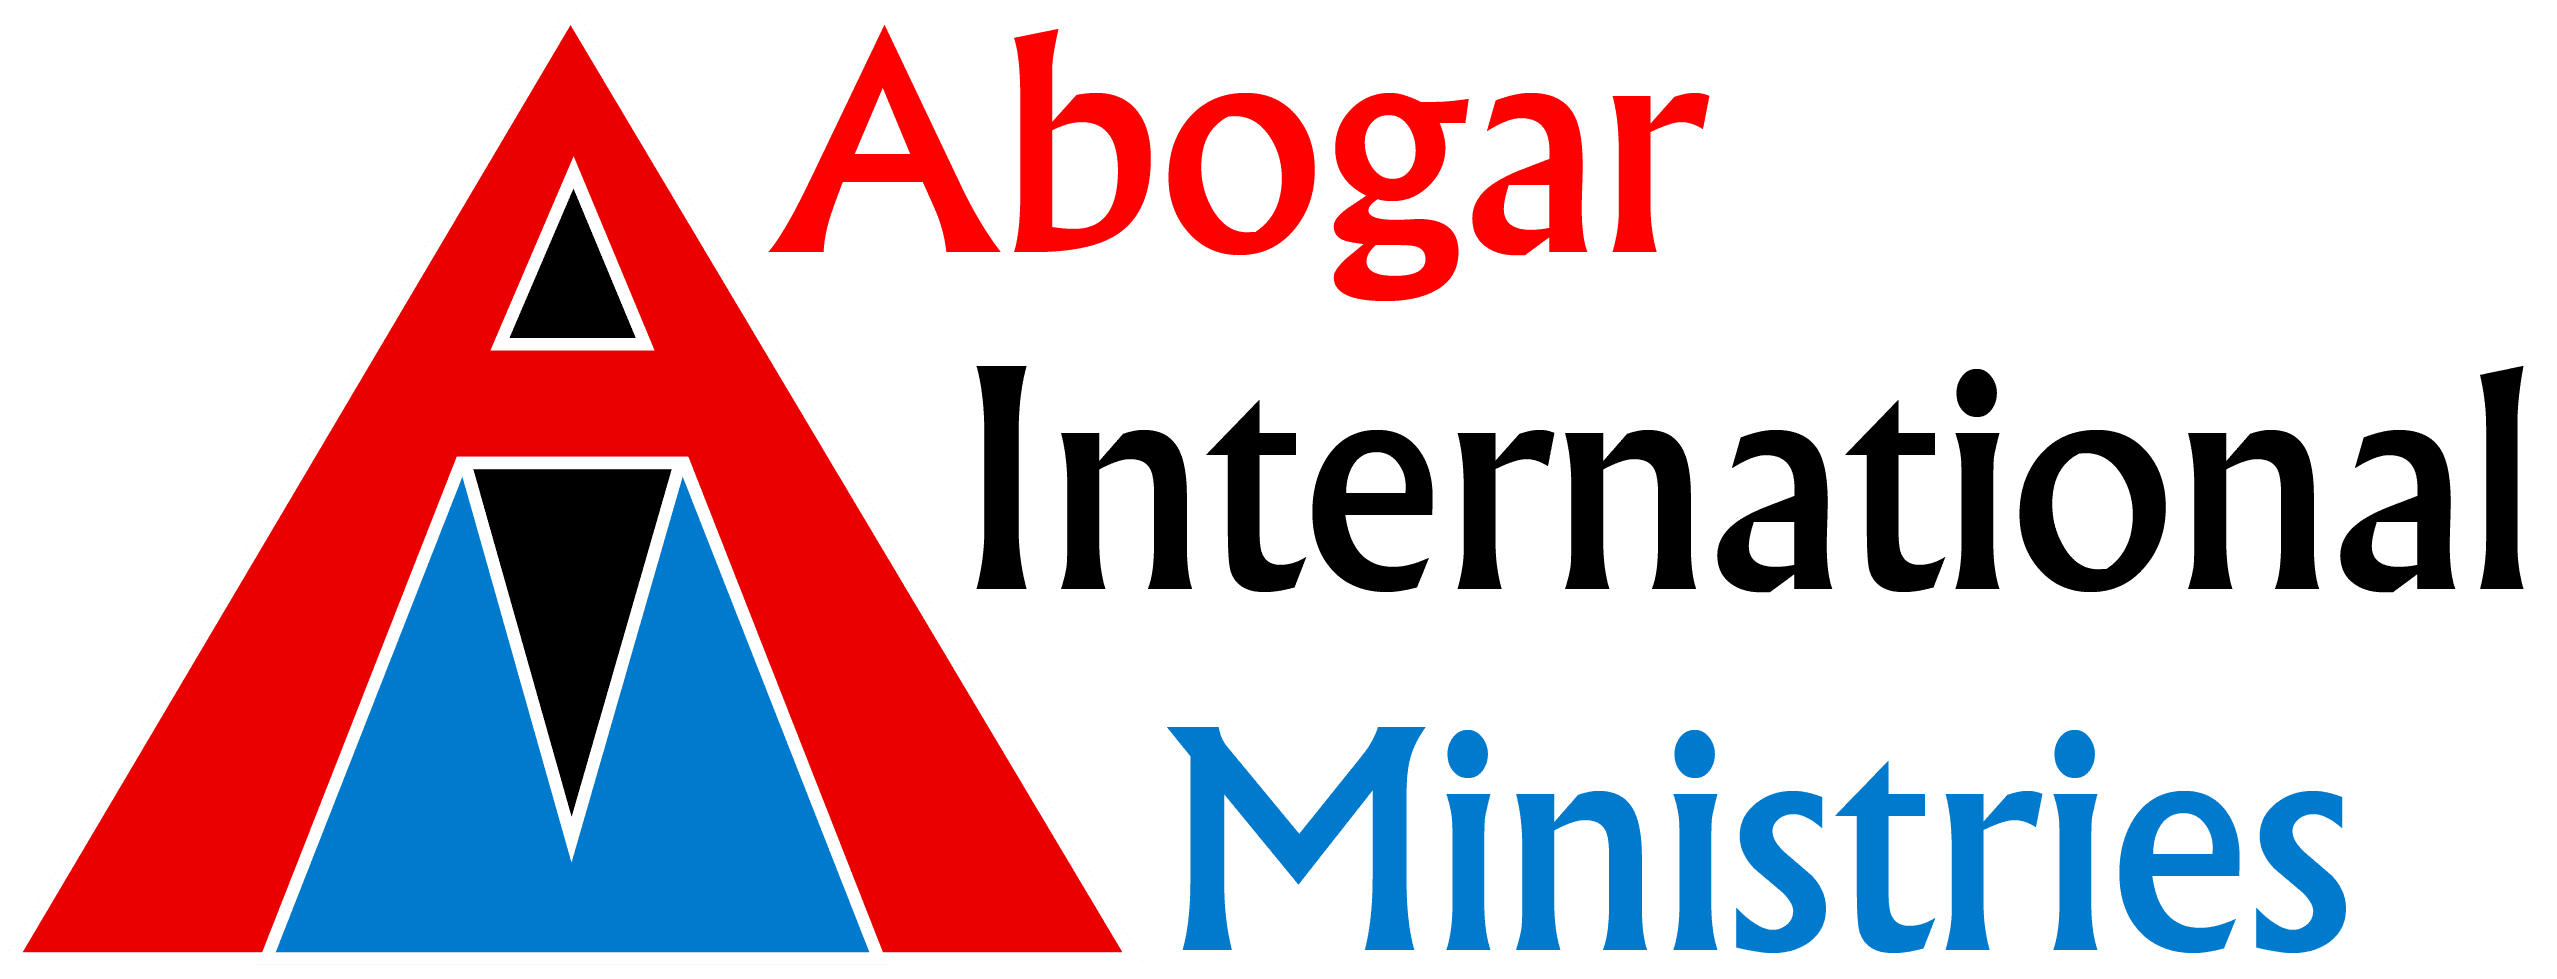 Abogar International Ministries